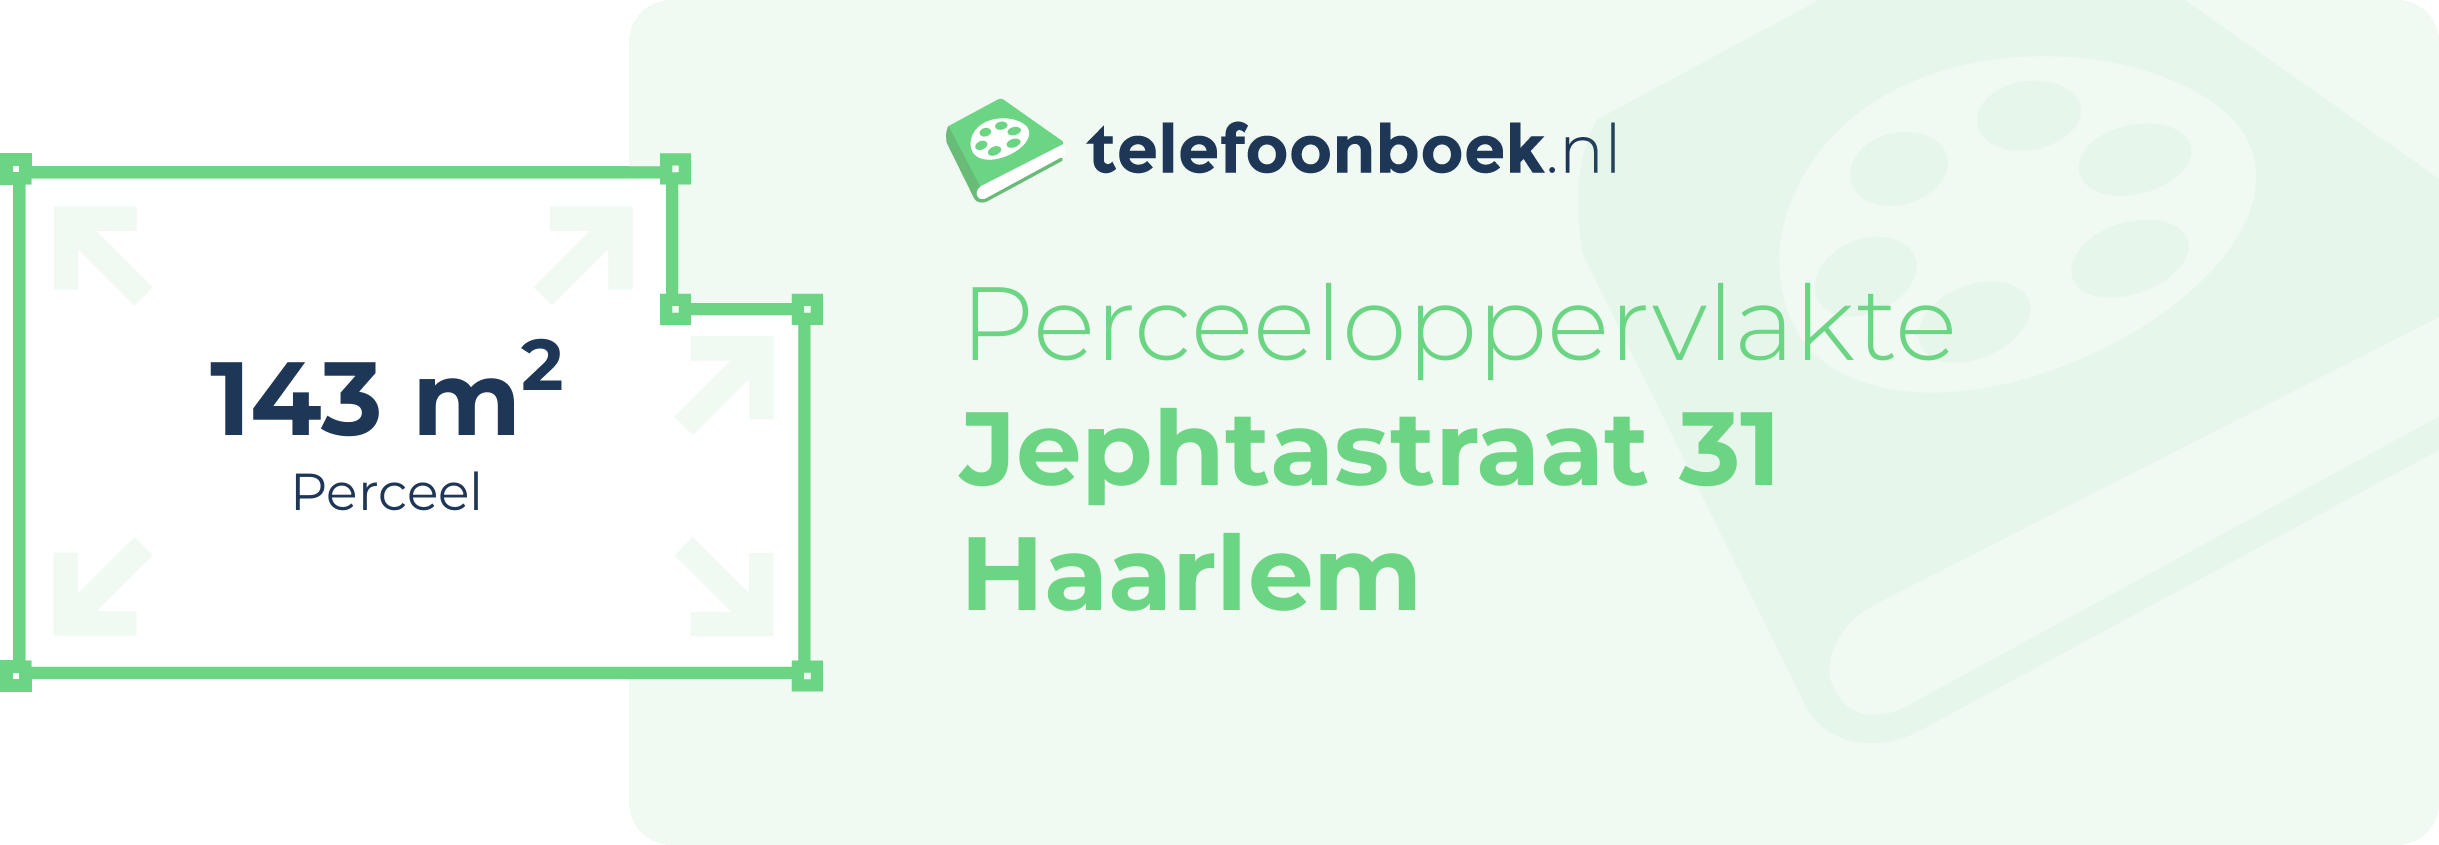 Perceeloppervlakte Jephtastraat 31 Haarlem